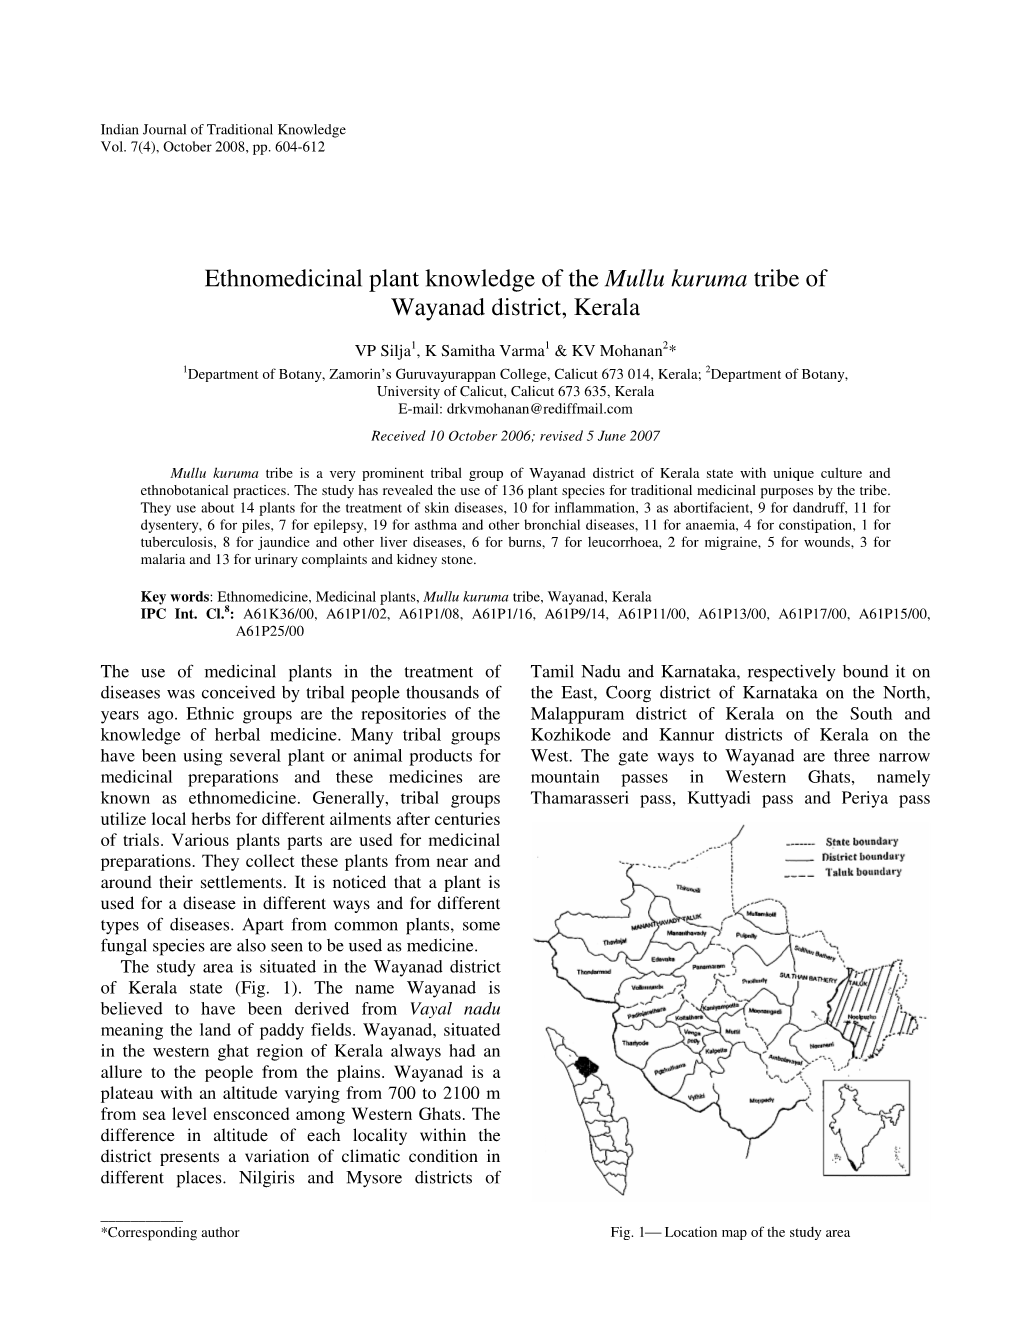 Ethnomedicinal Plant Knowledge of the Mullu Kuruma Tribe of Wayanad District, Kerala